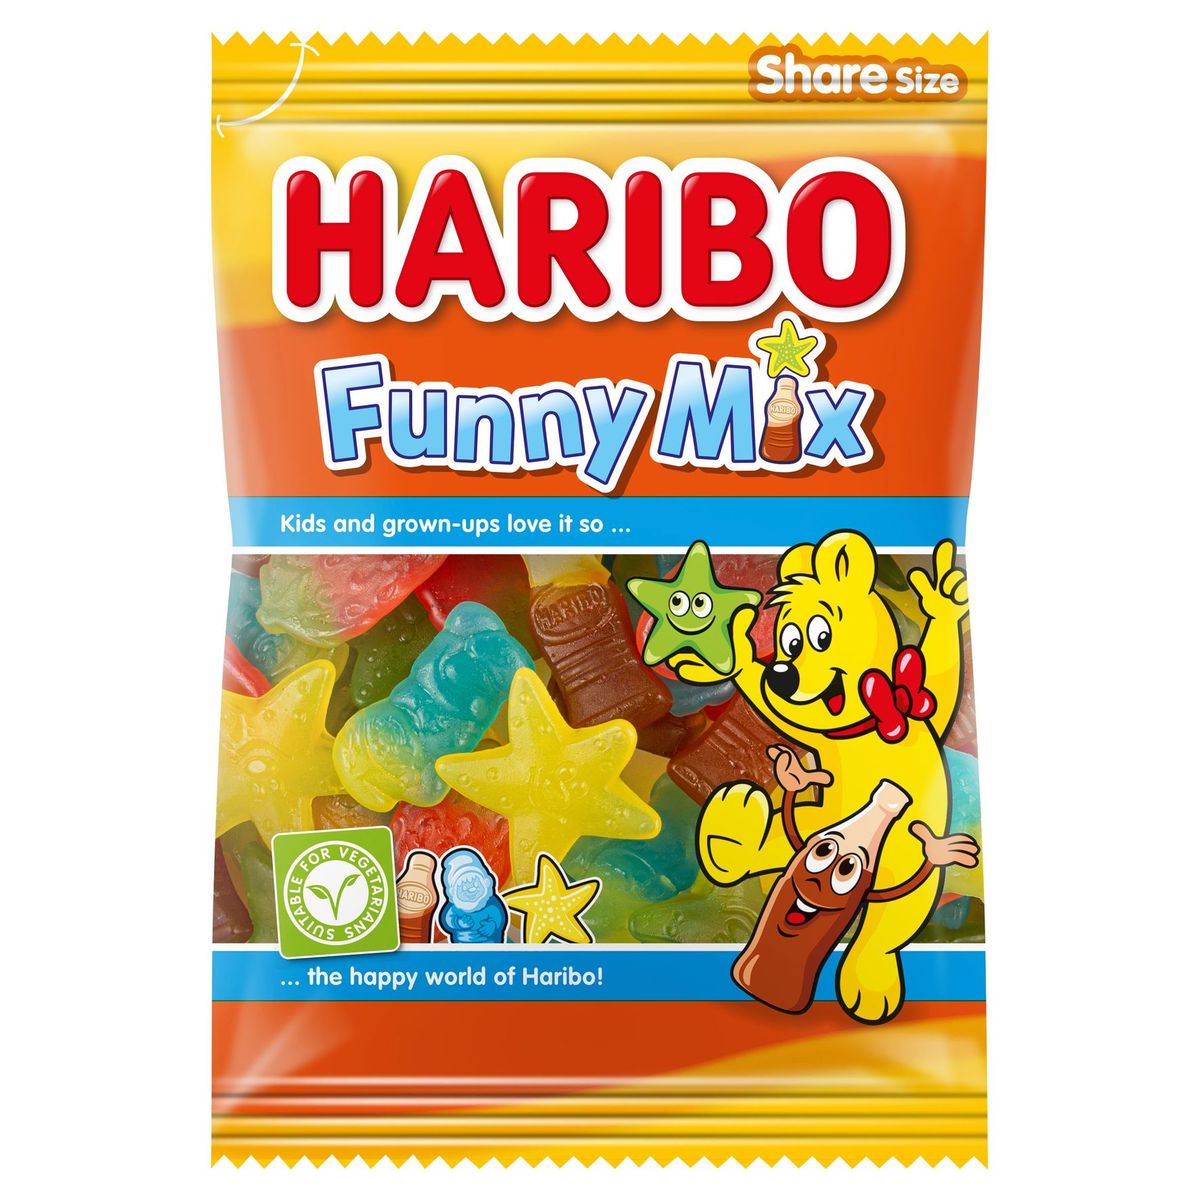 HARIBO Funny Mix Share Size 250 g